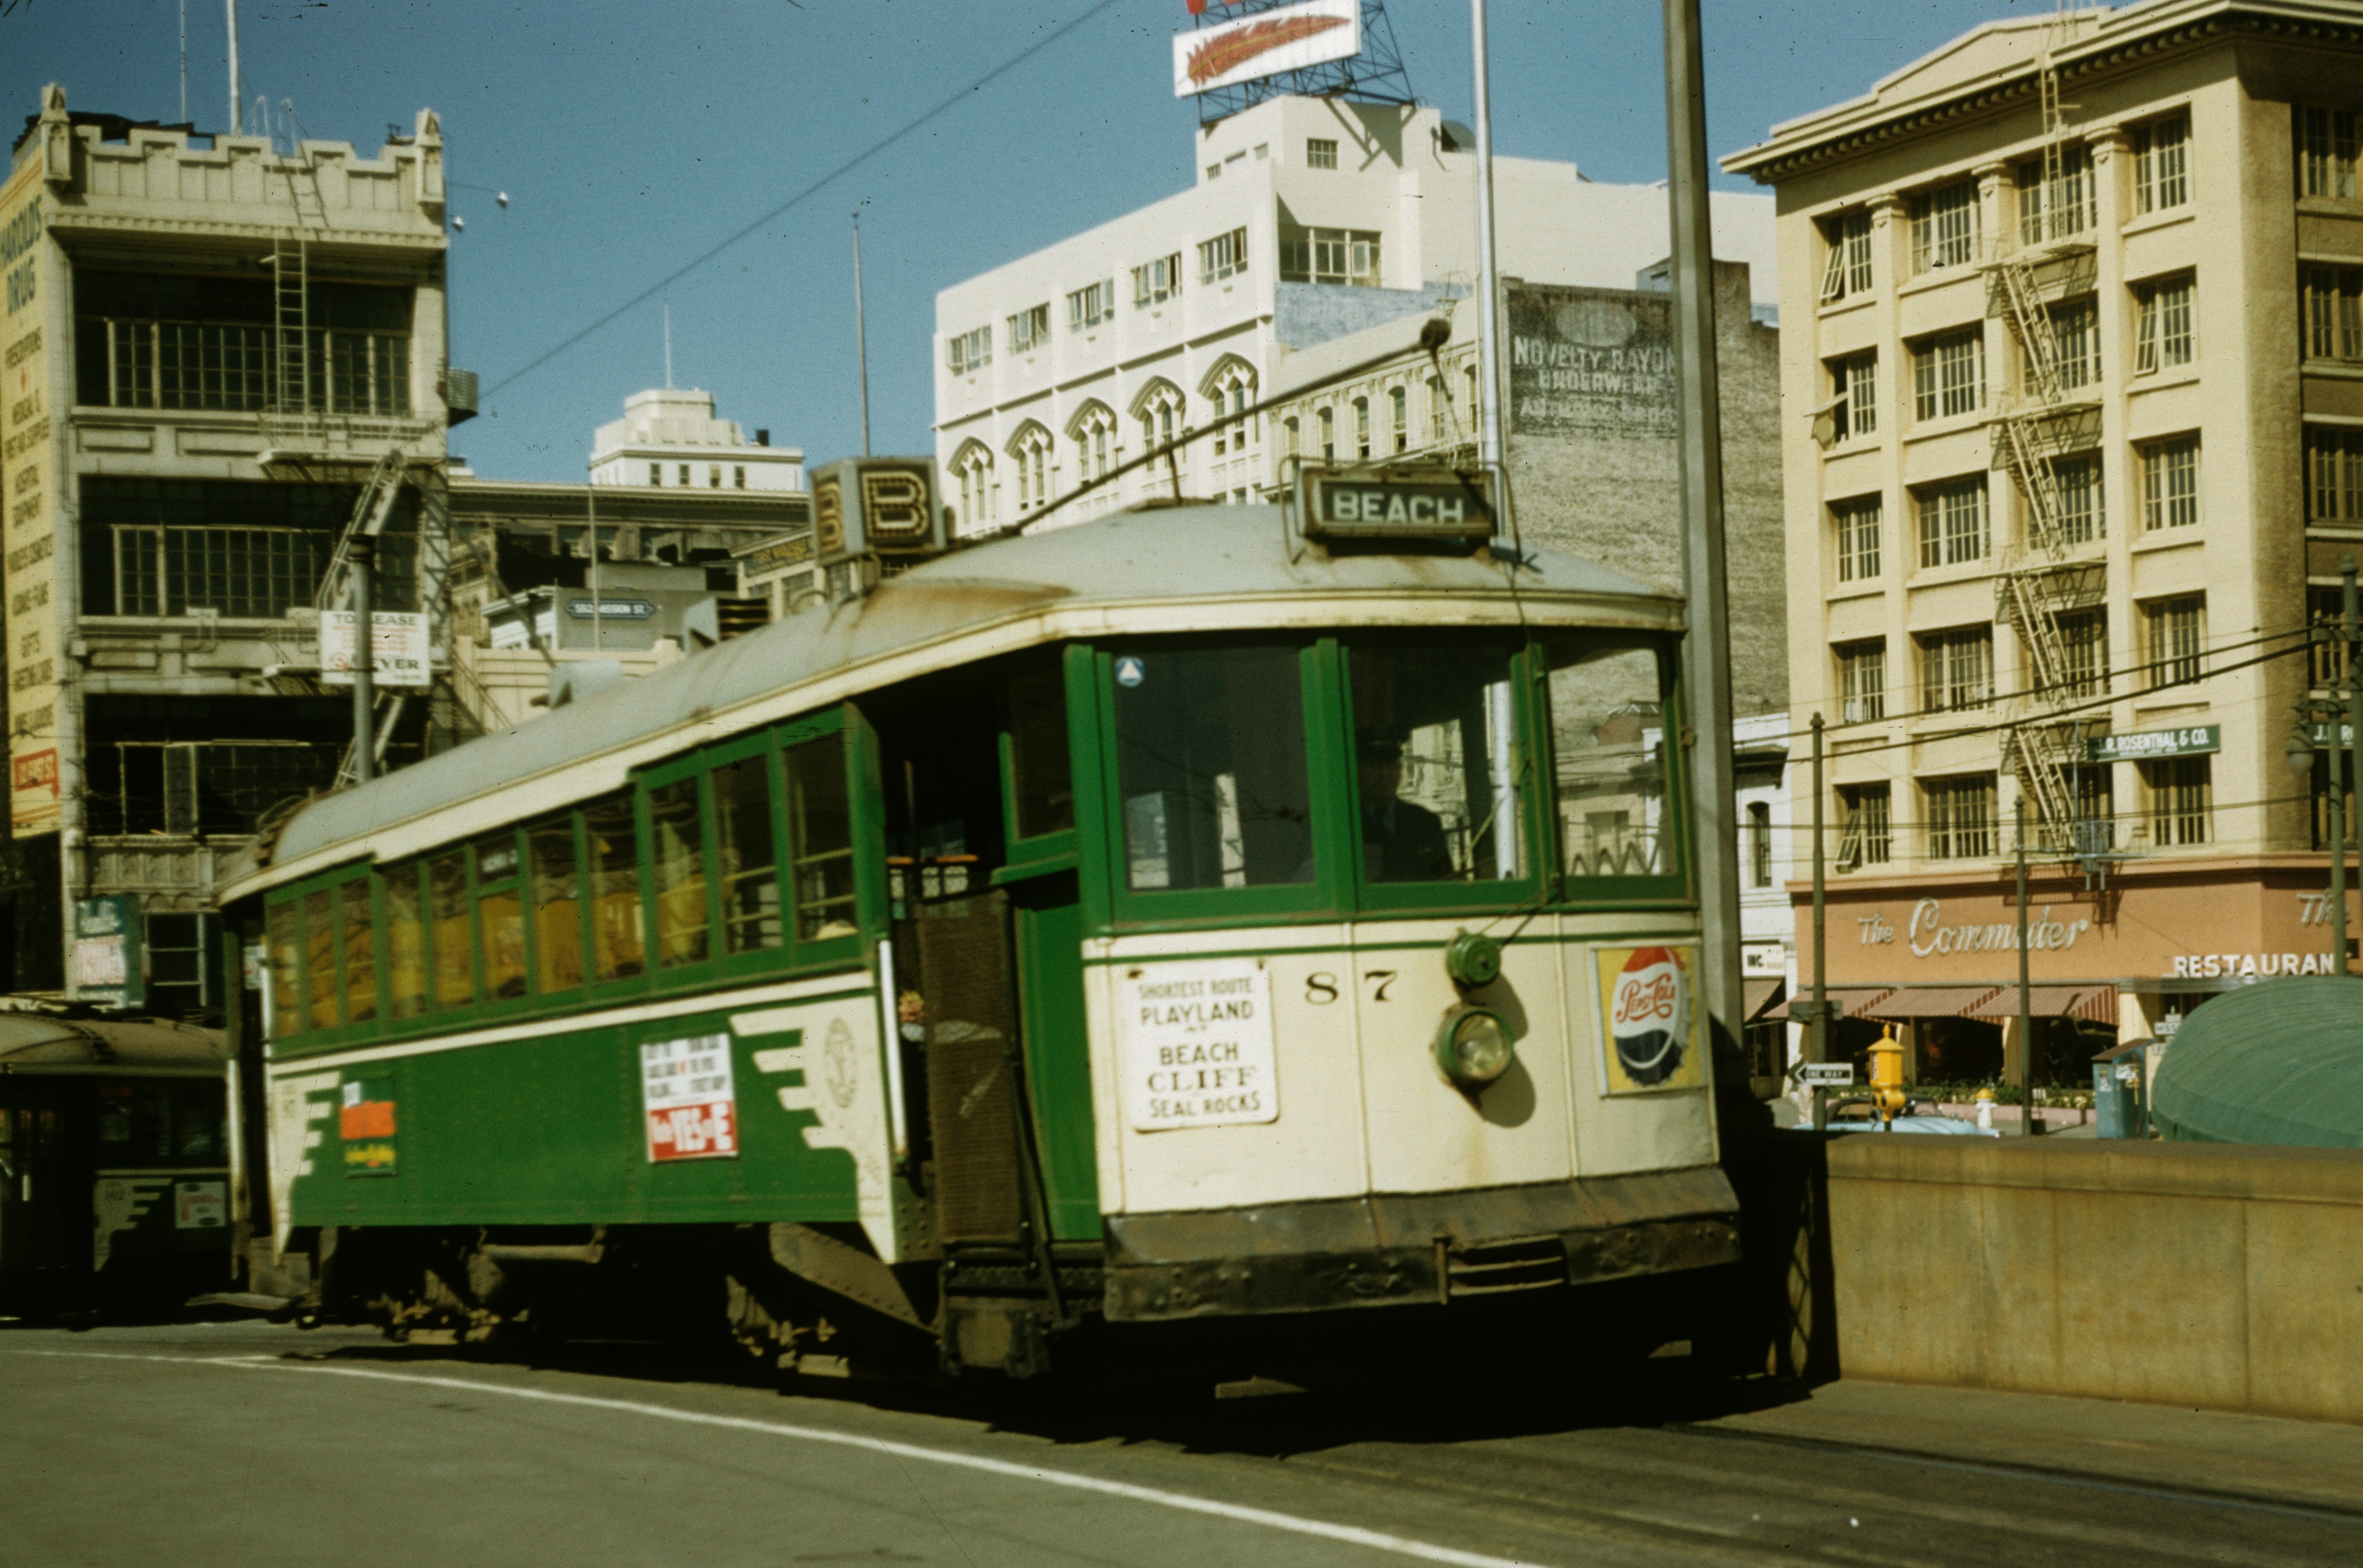 San Francisco streetcar